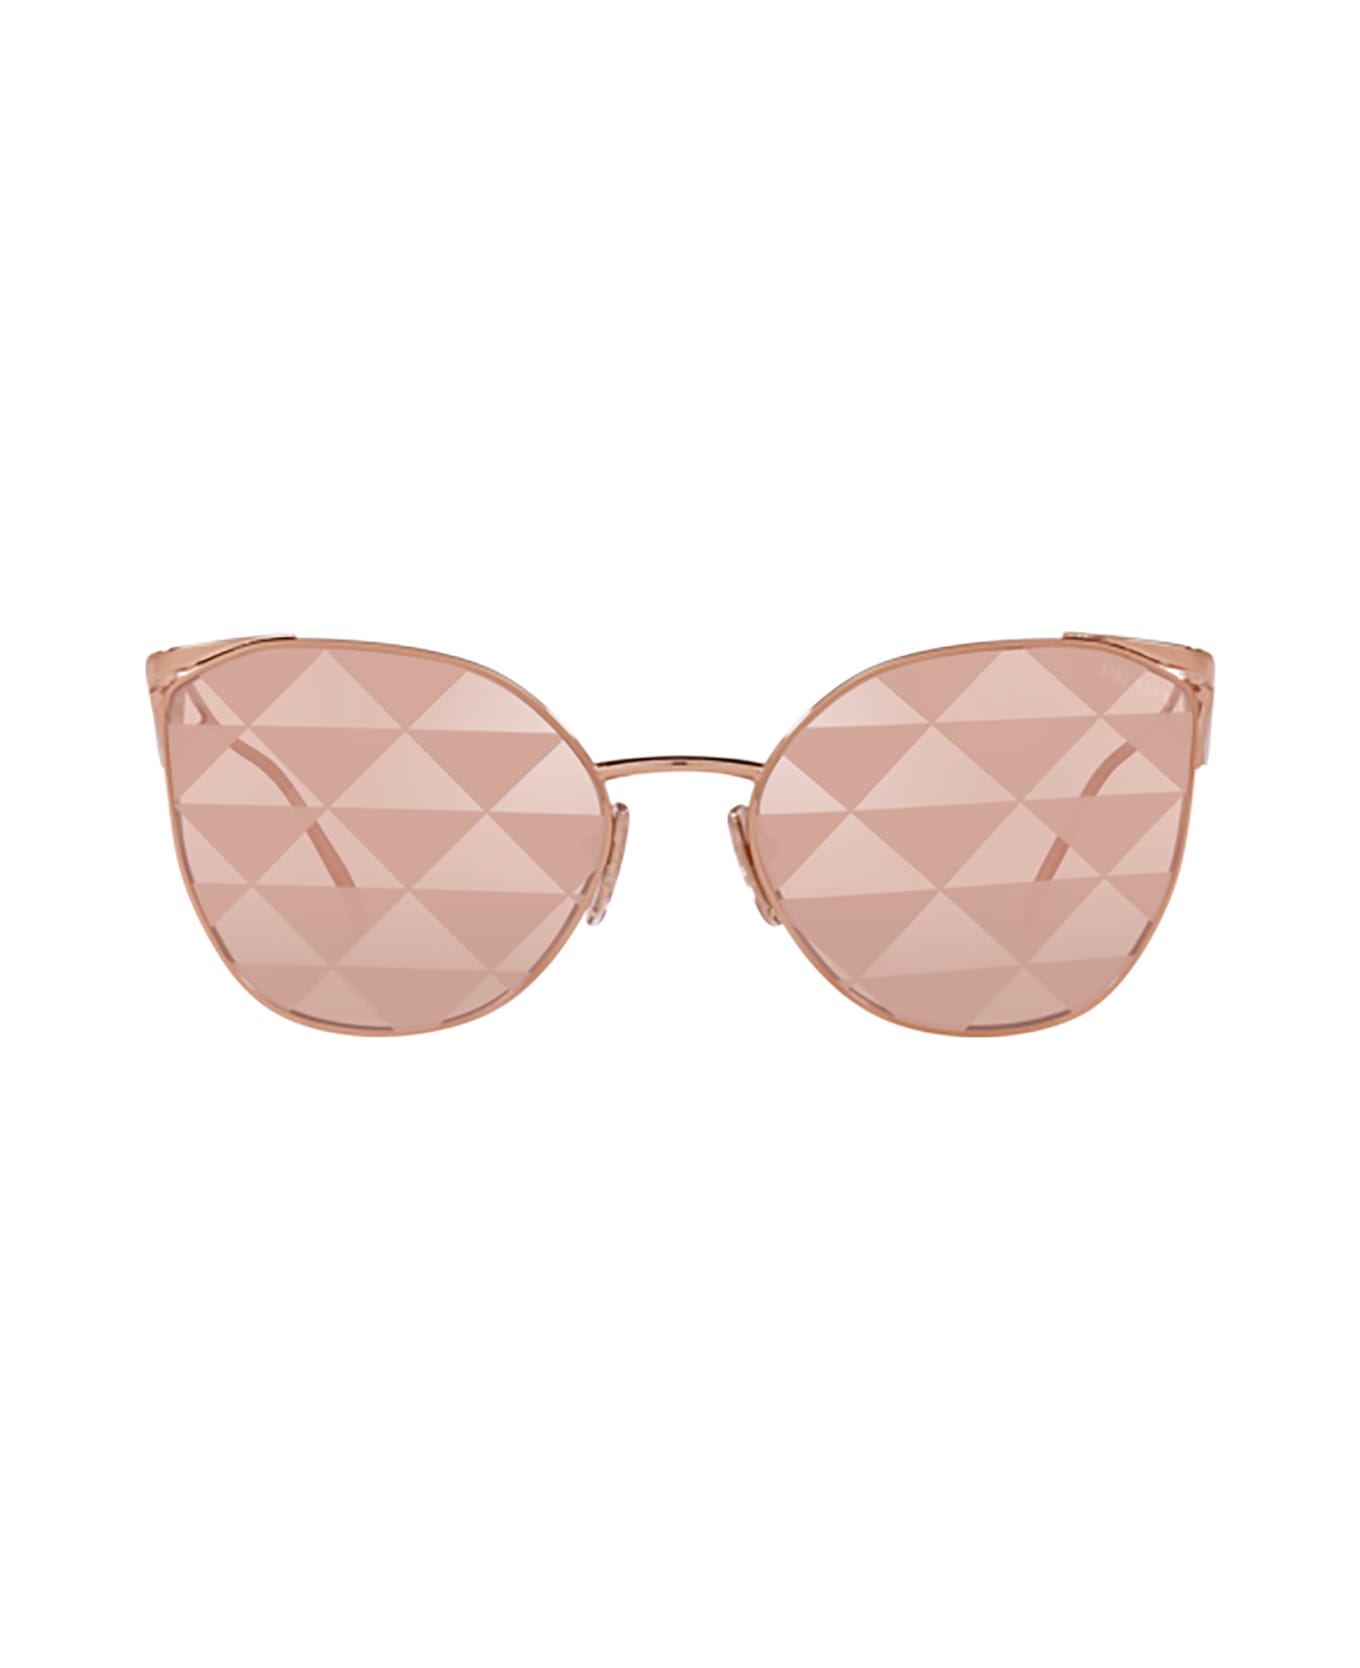 Prada Eyewear Pr 50zs Pink Gold Sunglasses - Pink Gold サングラス